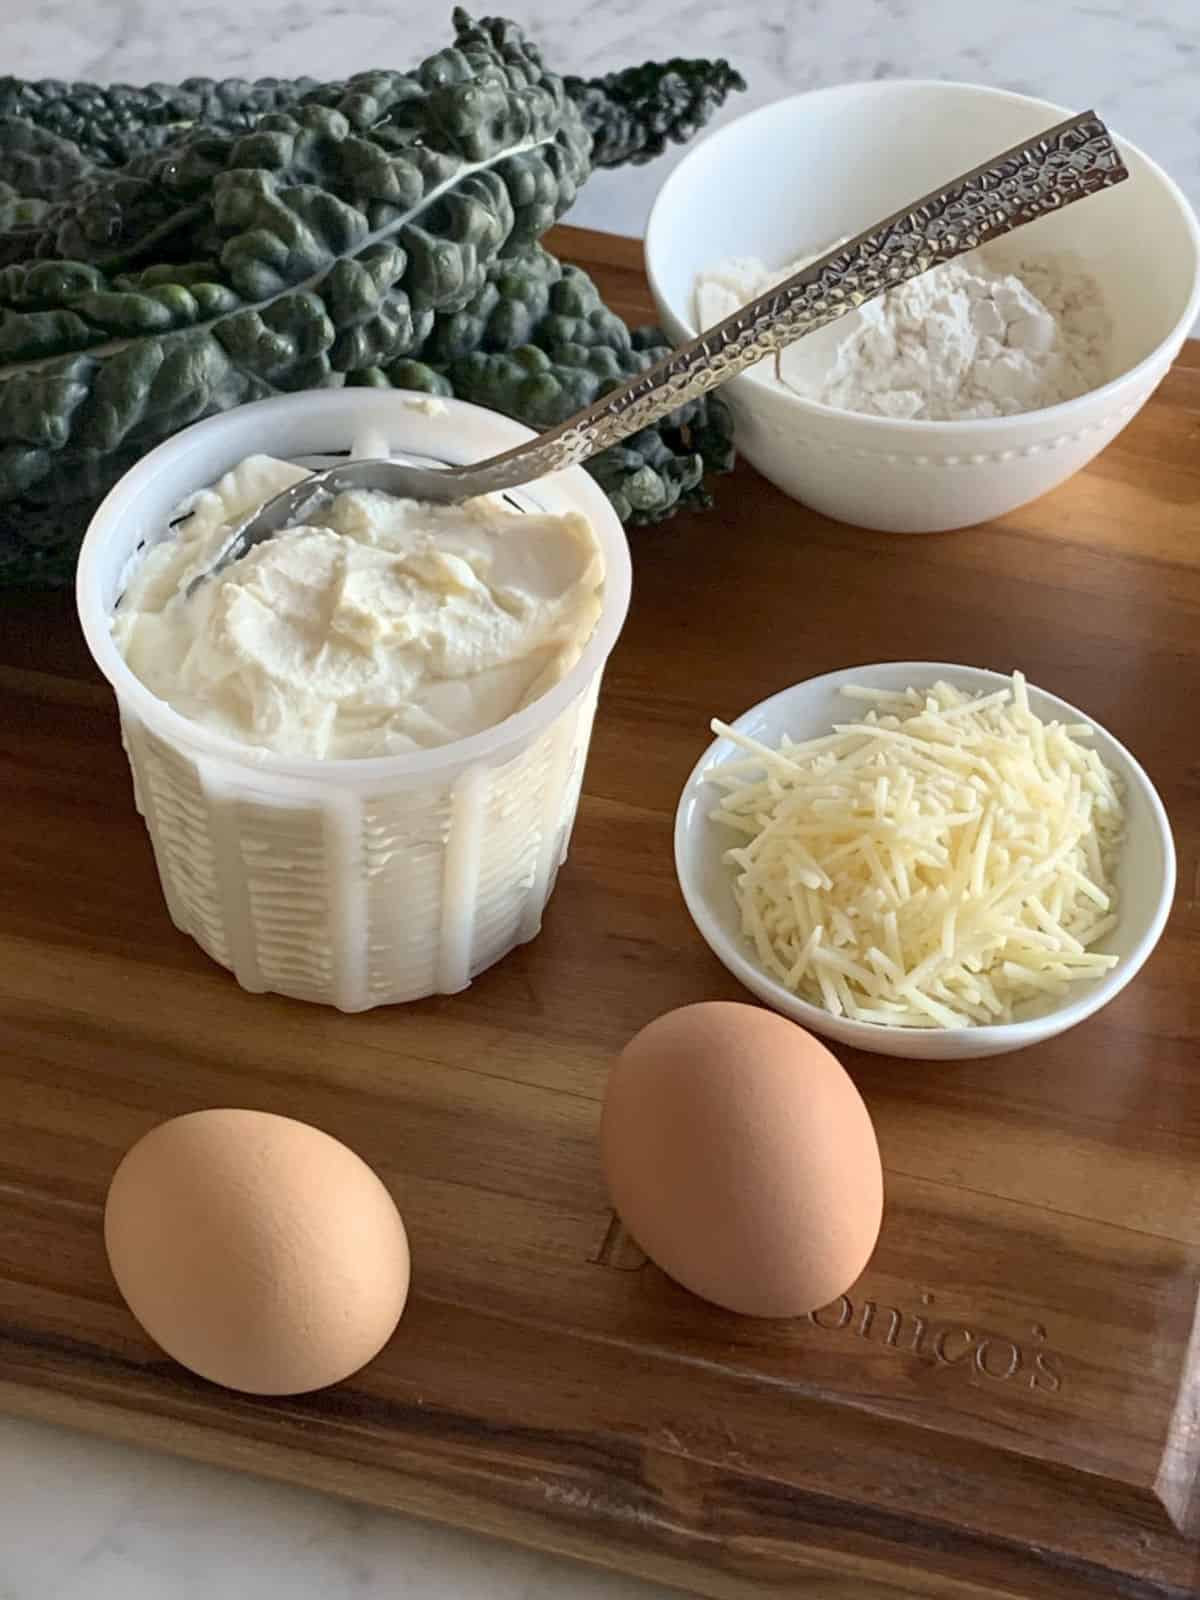 Ricotta kale gnocchi ingredients. 